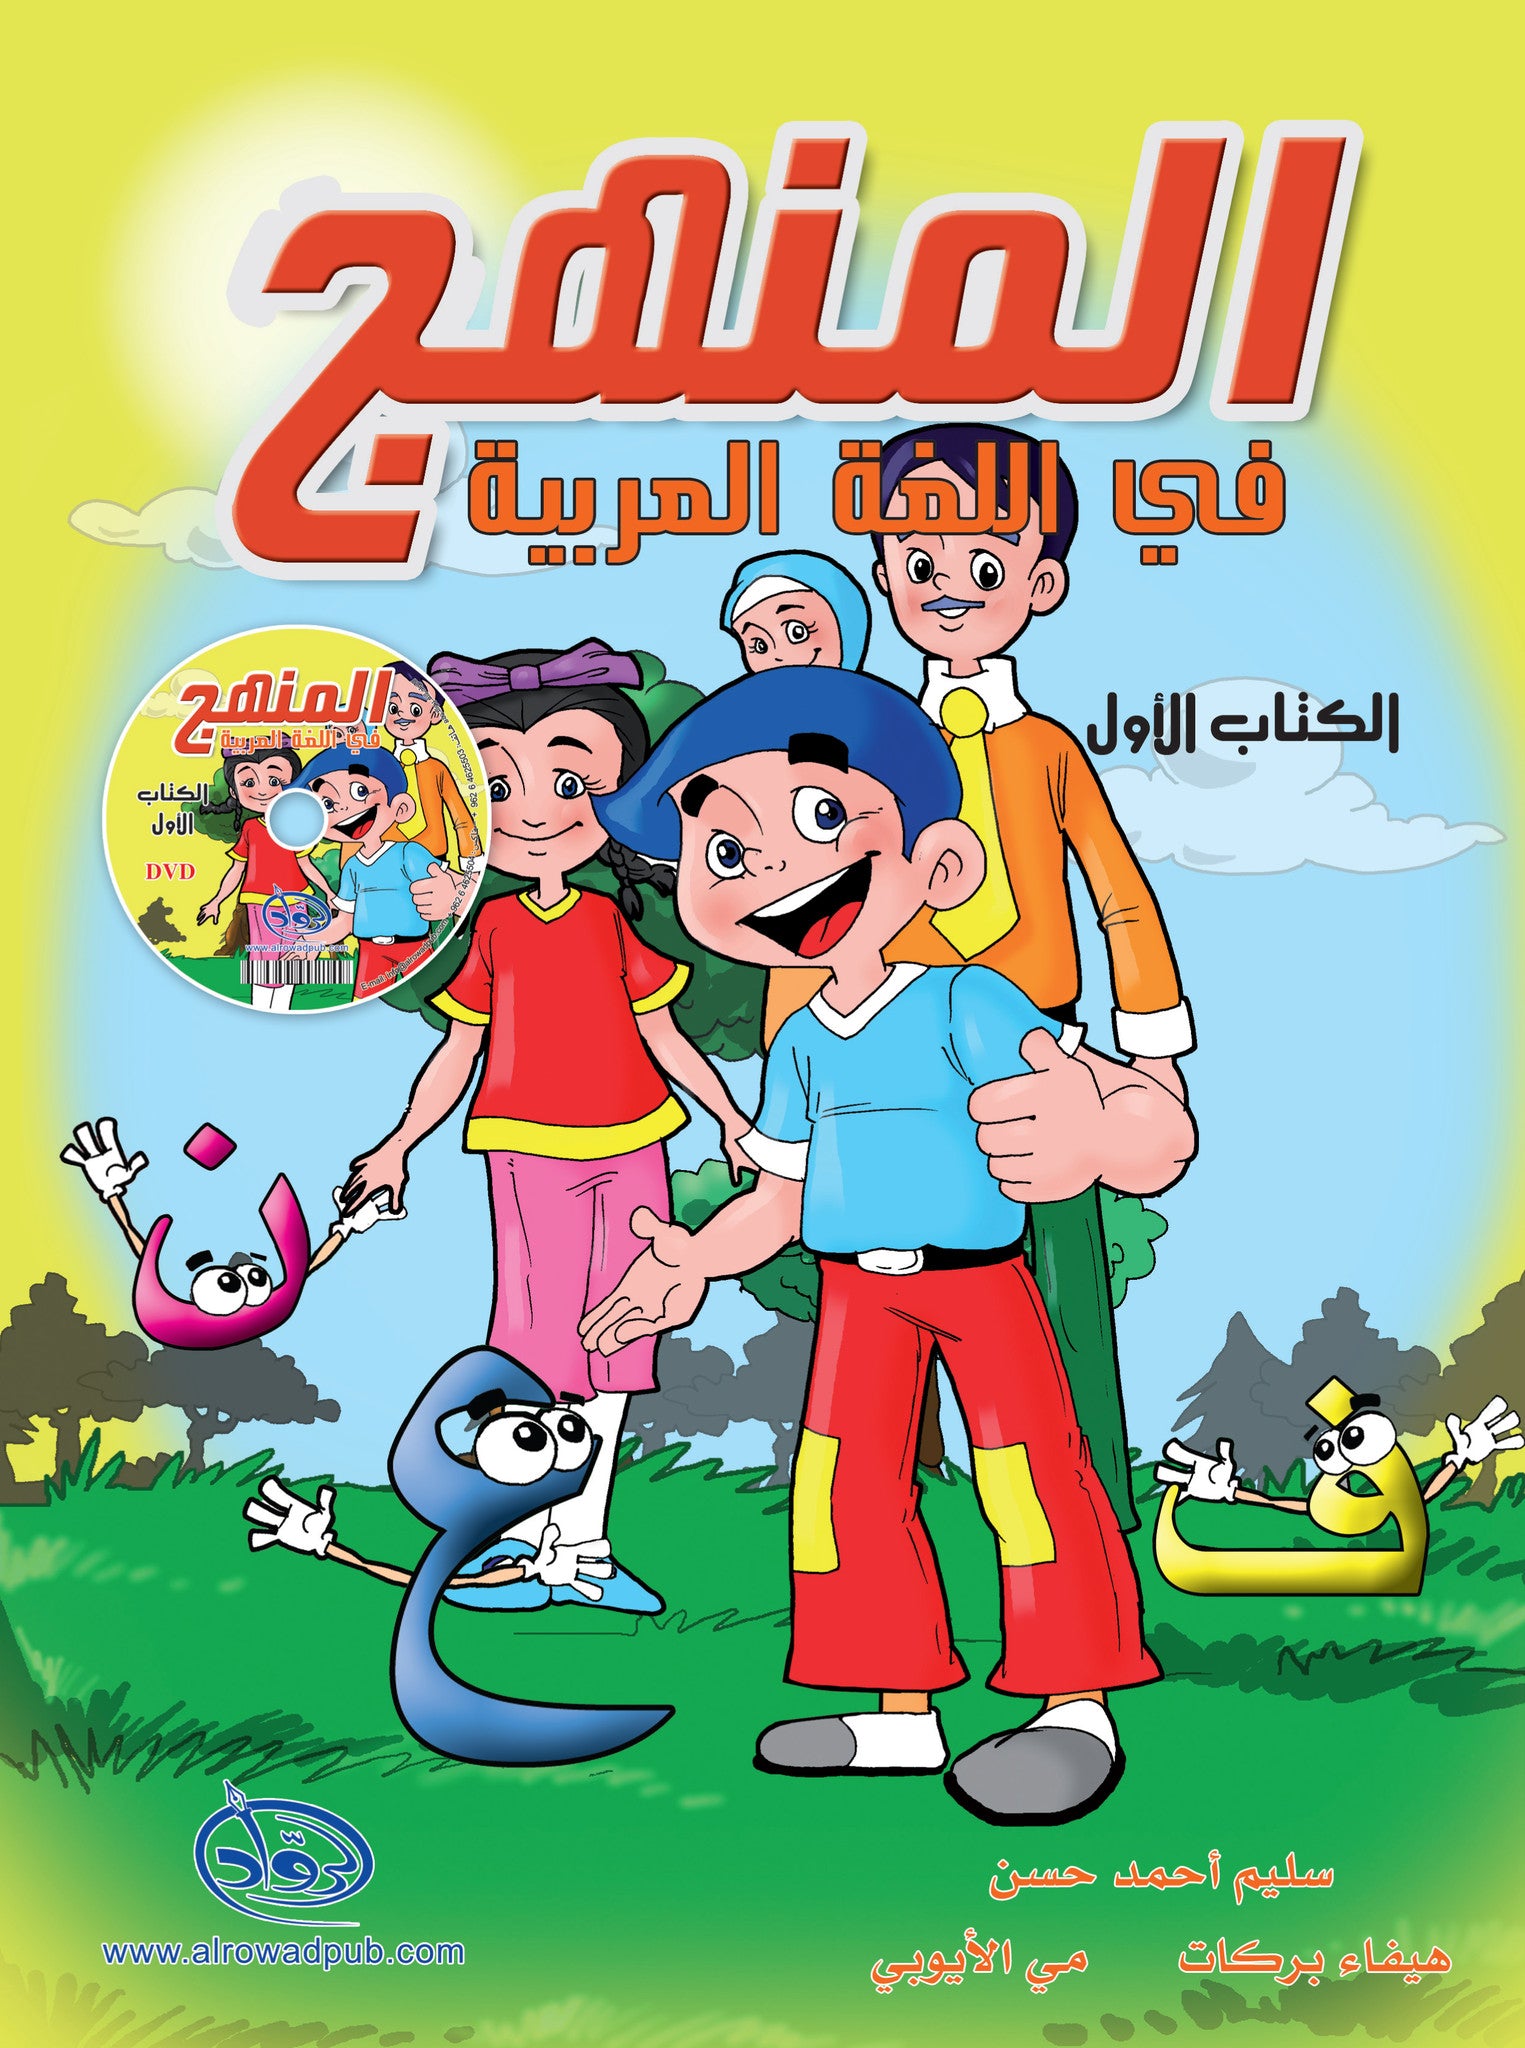 Methods in Arabic Language Textbook Level 1 المنهج في اللّغة العربيّة